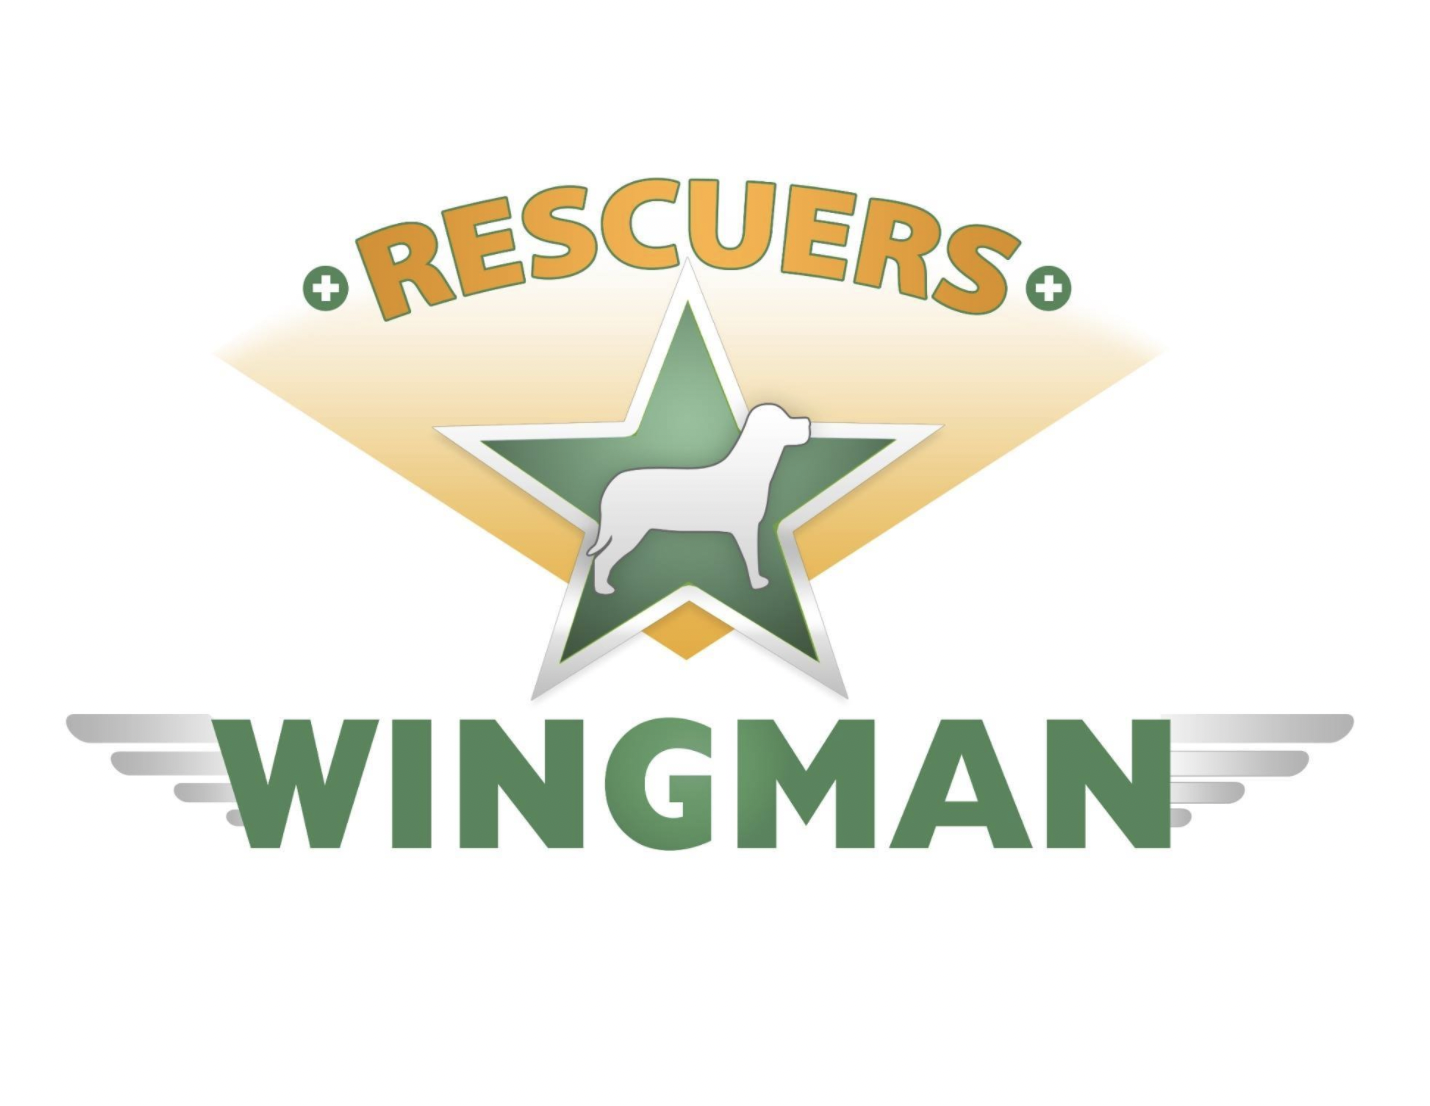 Rescuers Wingman